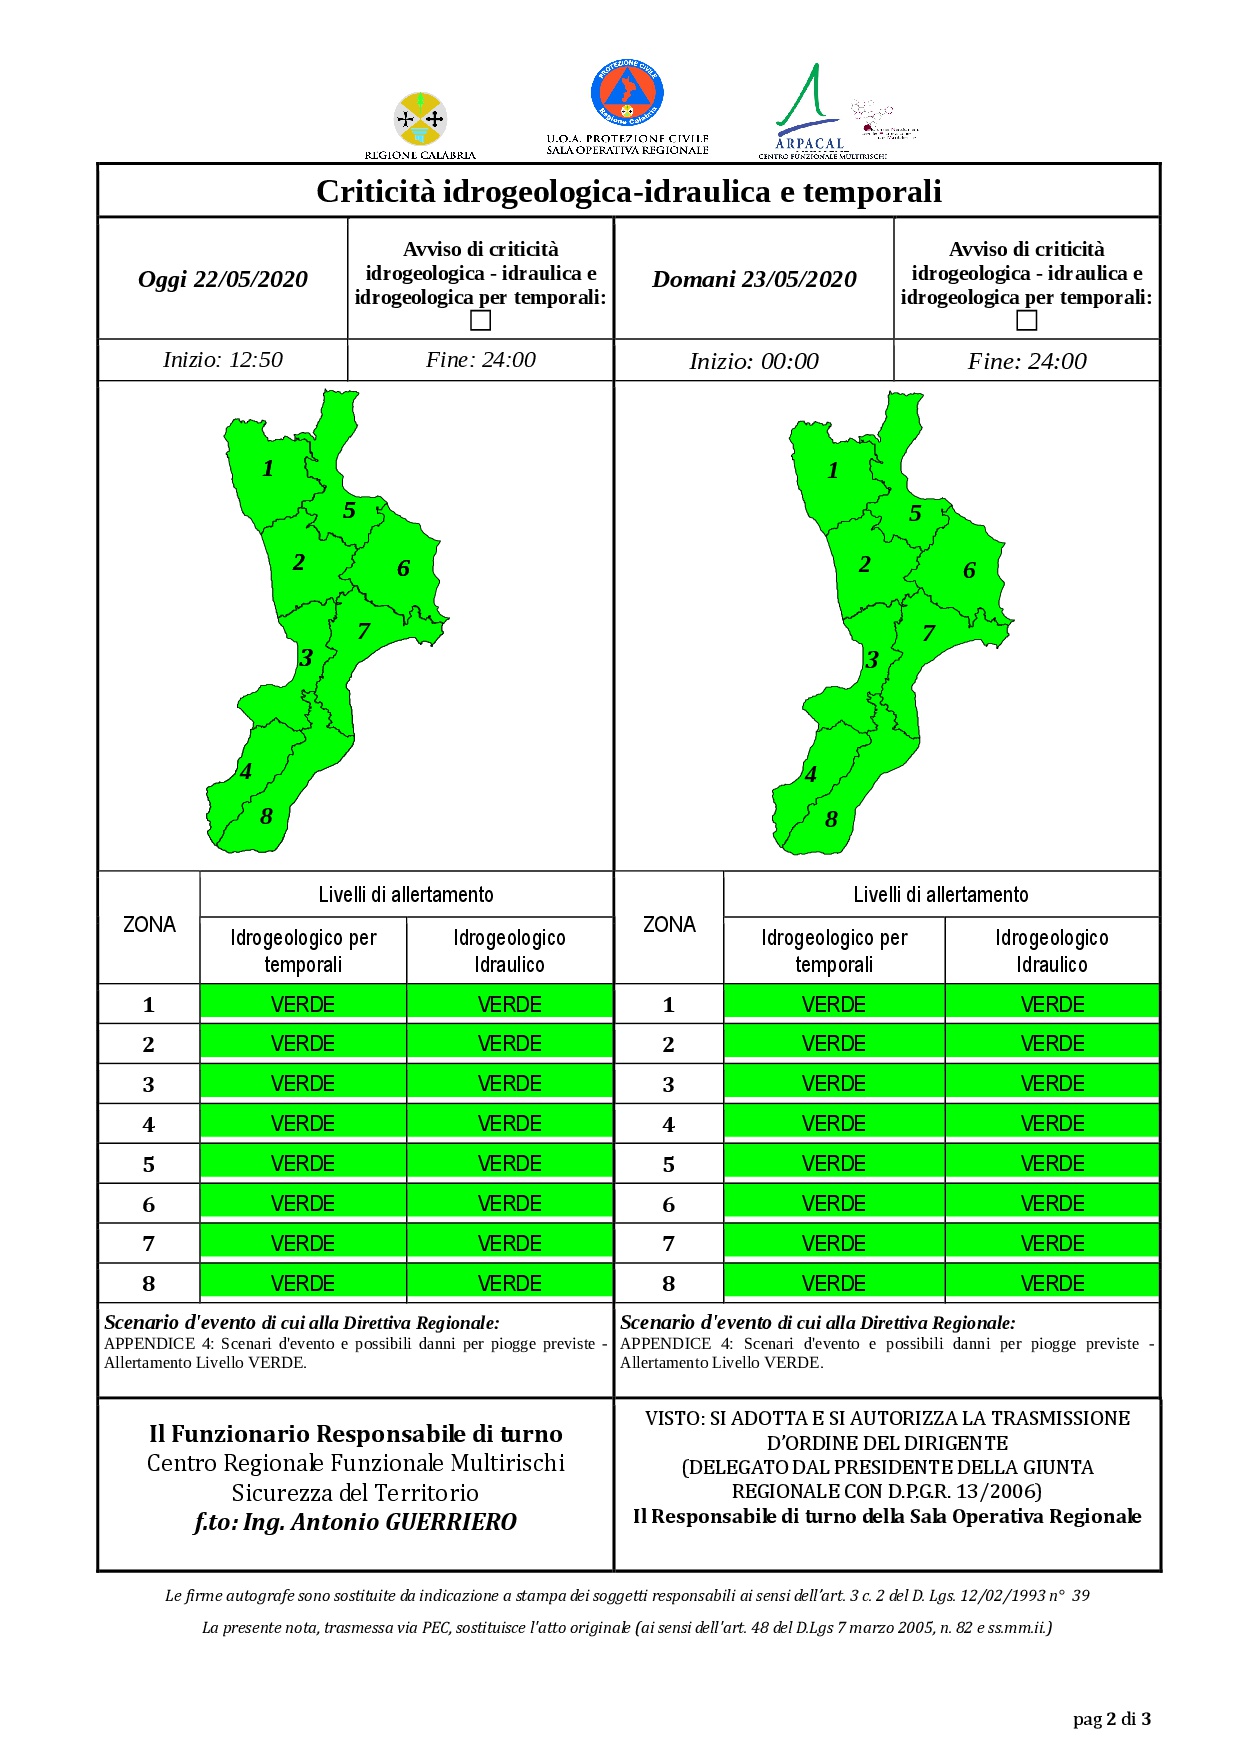 Criticità idrogeologica-idraulica e temporali in Calabria 22-05-2020